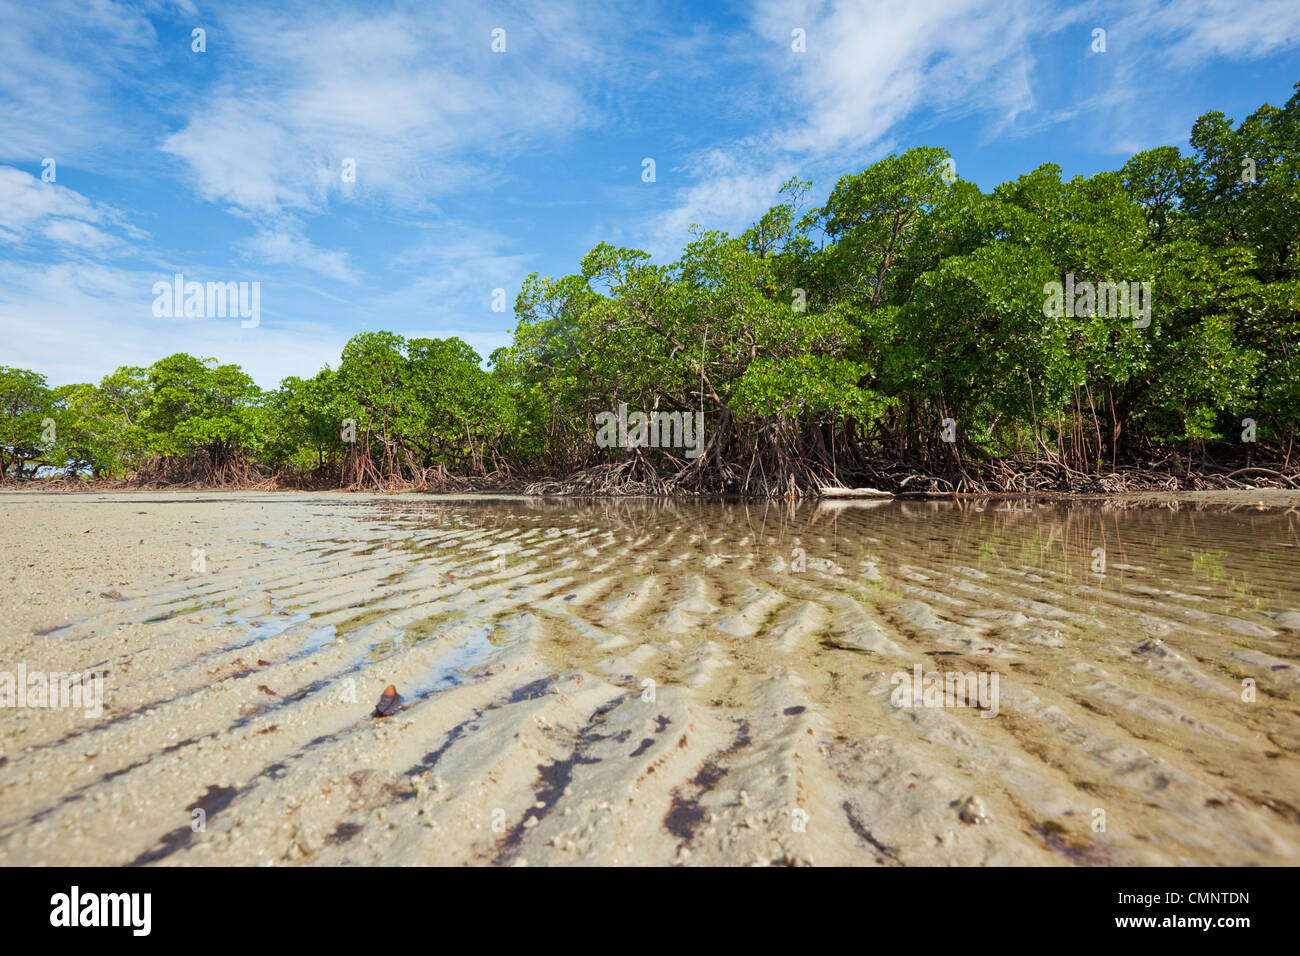 Mangrovenwald bei Ebbe auf Myall Beach. Cape Tribulation, Daintree Nationalpark, Queensland, Australien Stockfoto